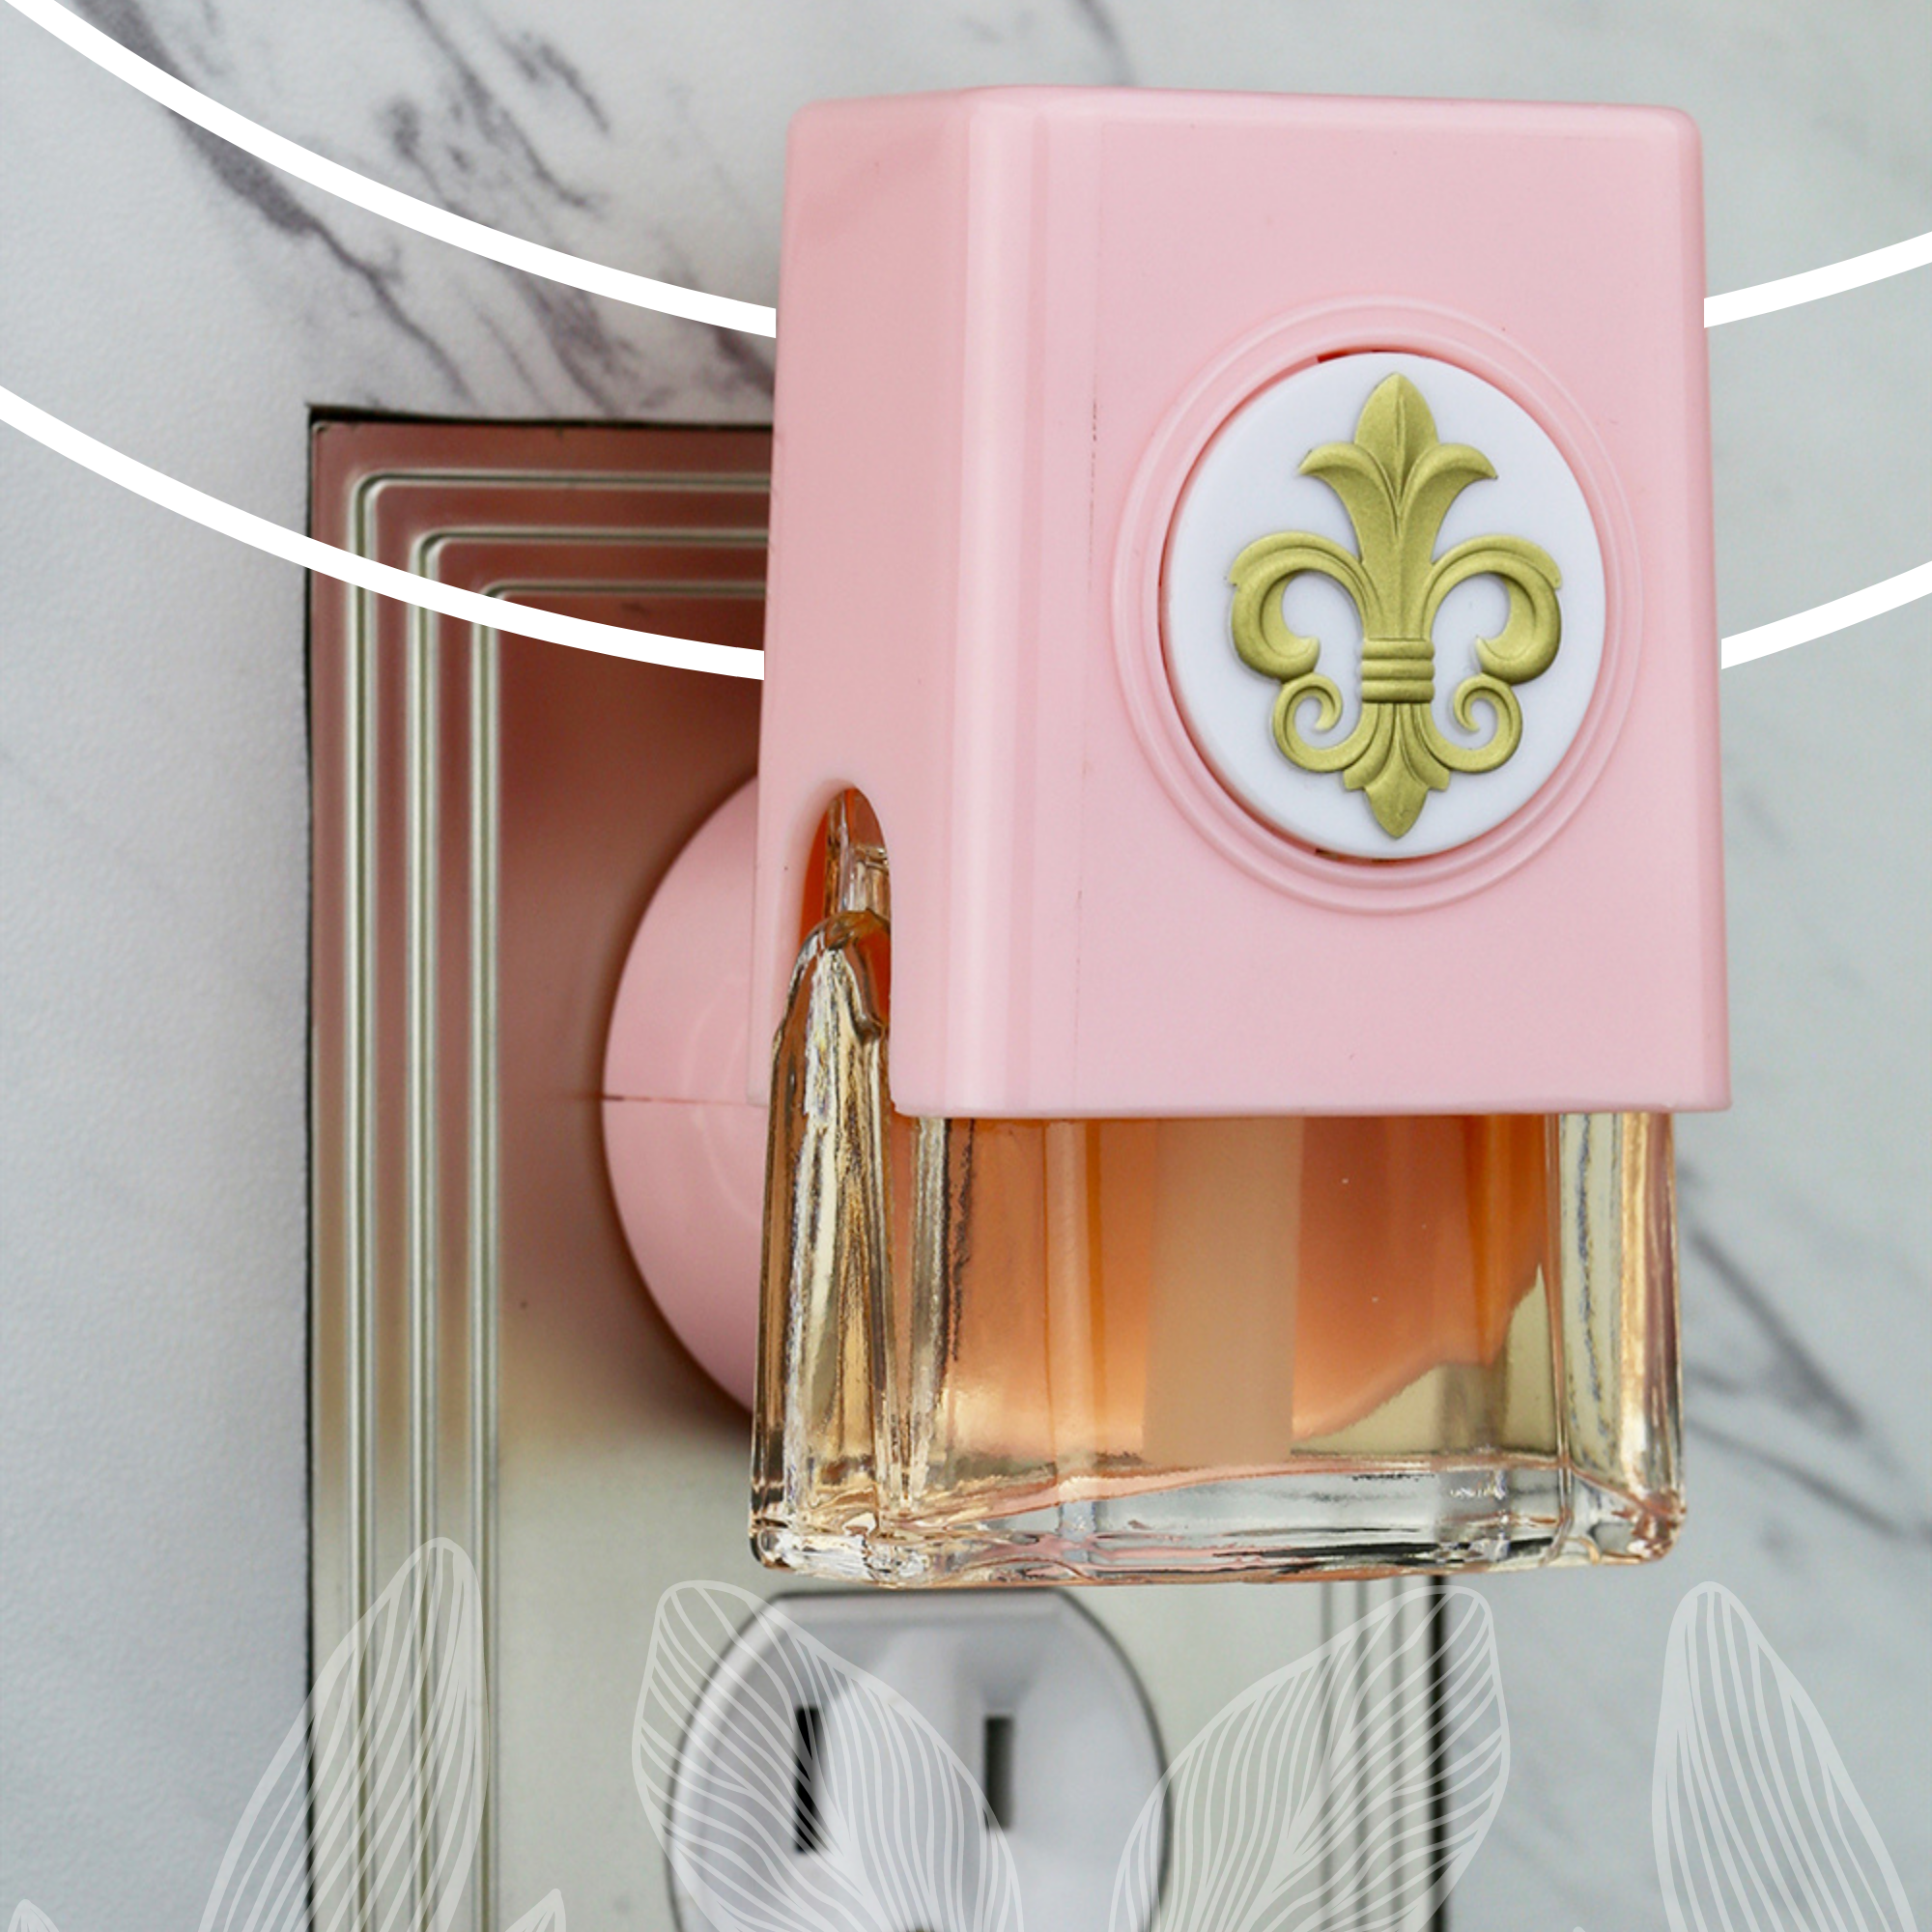 Fleur Medallion Plugables® Plugin Aromalectric® Scented Oil Diffuser - Rose Quartz  Home Fragrance Accessories